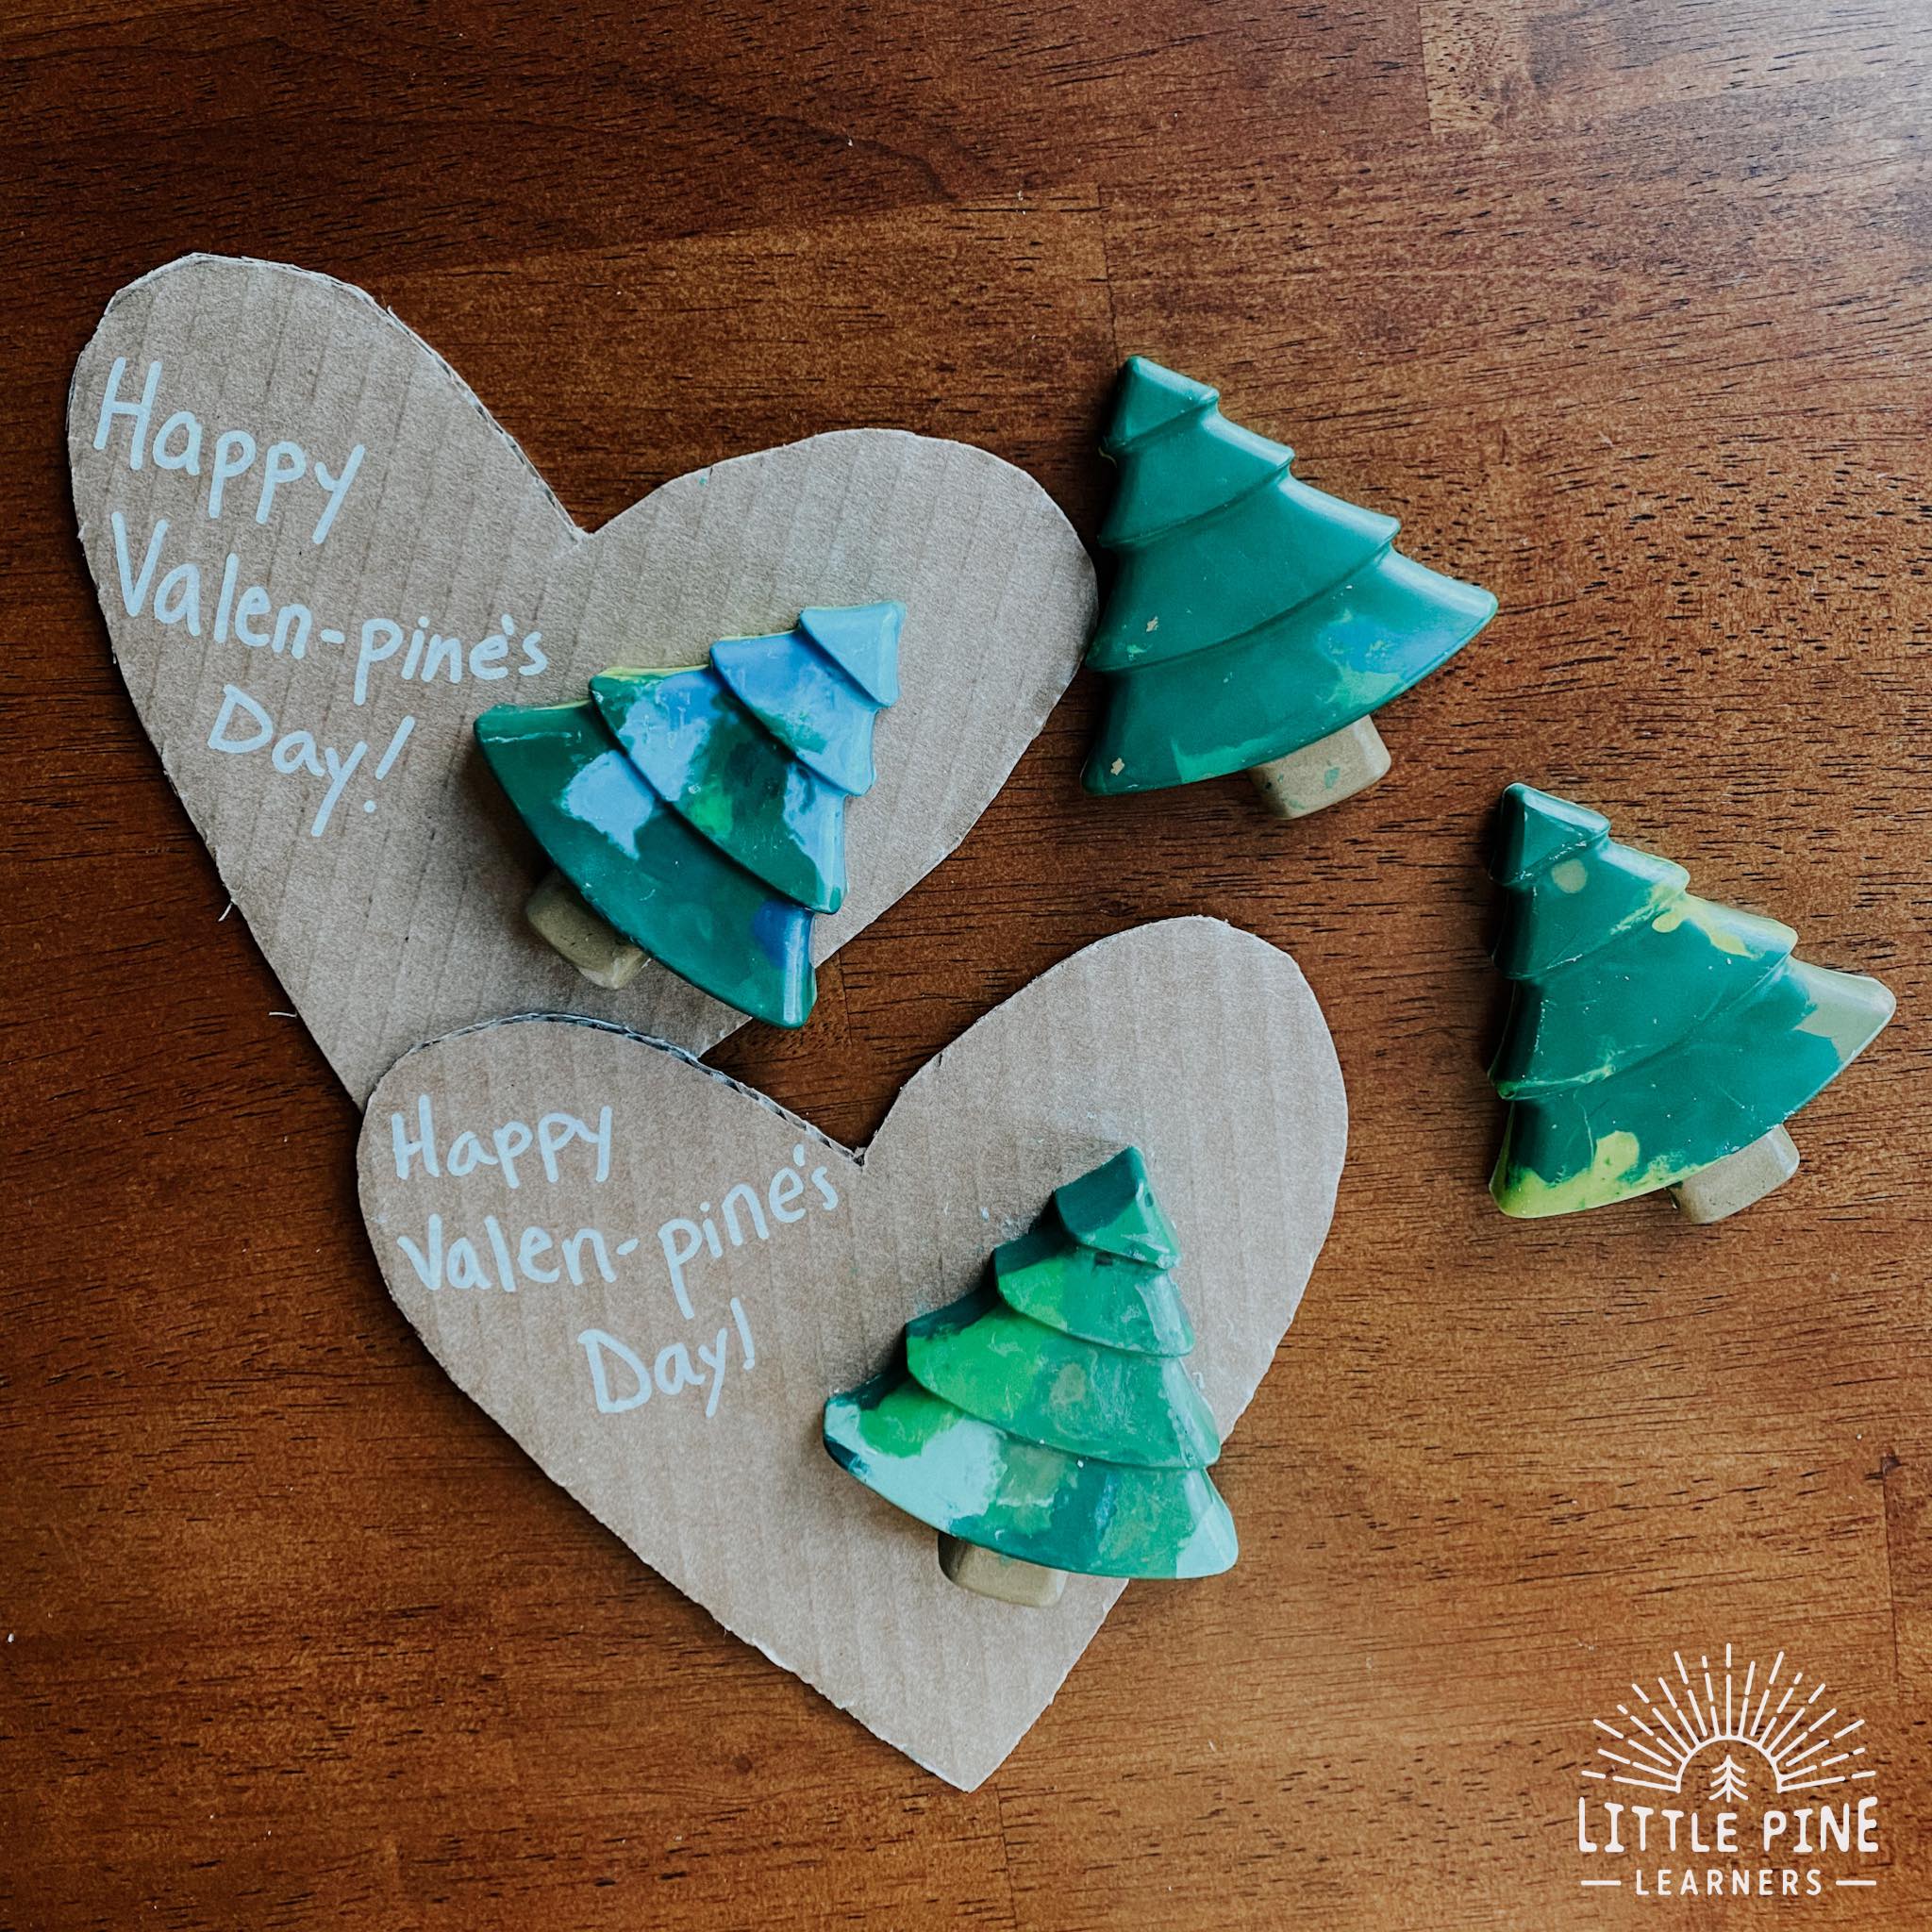 Cardboard hearts and crayon pine trees